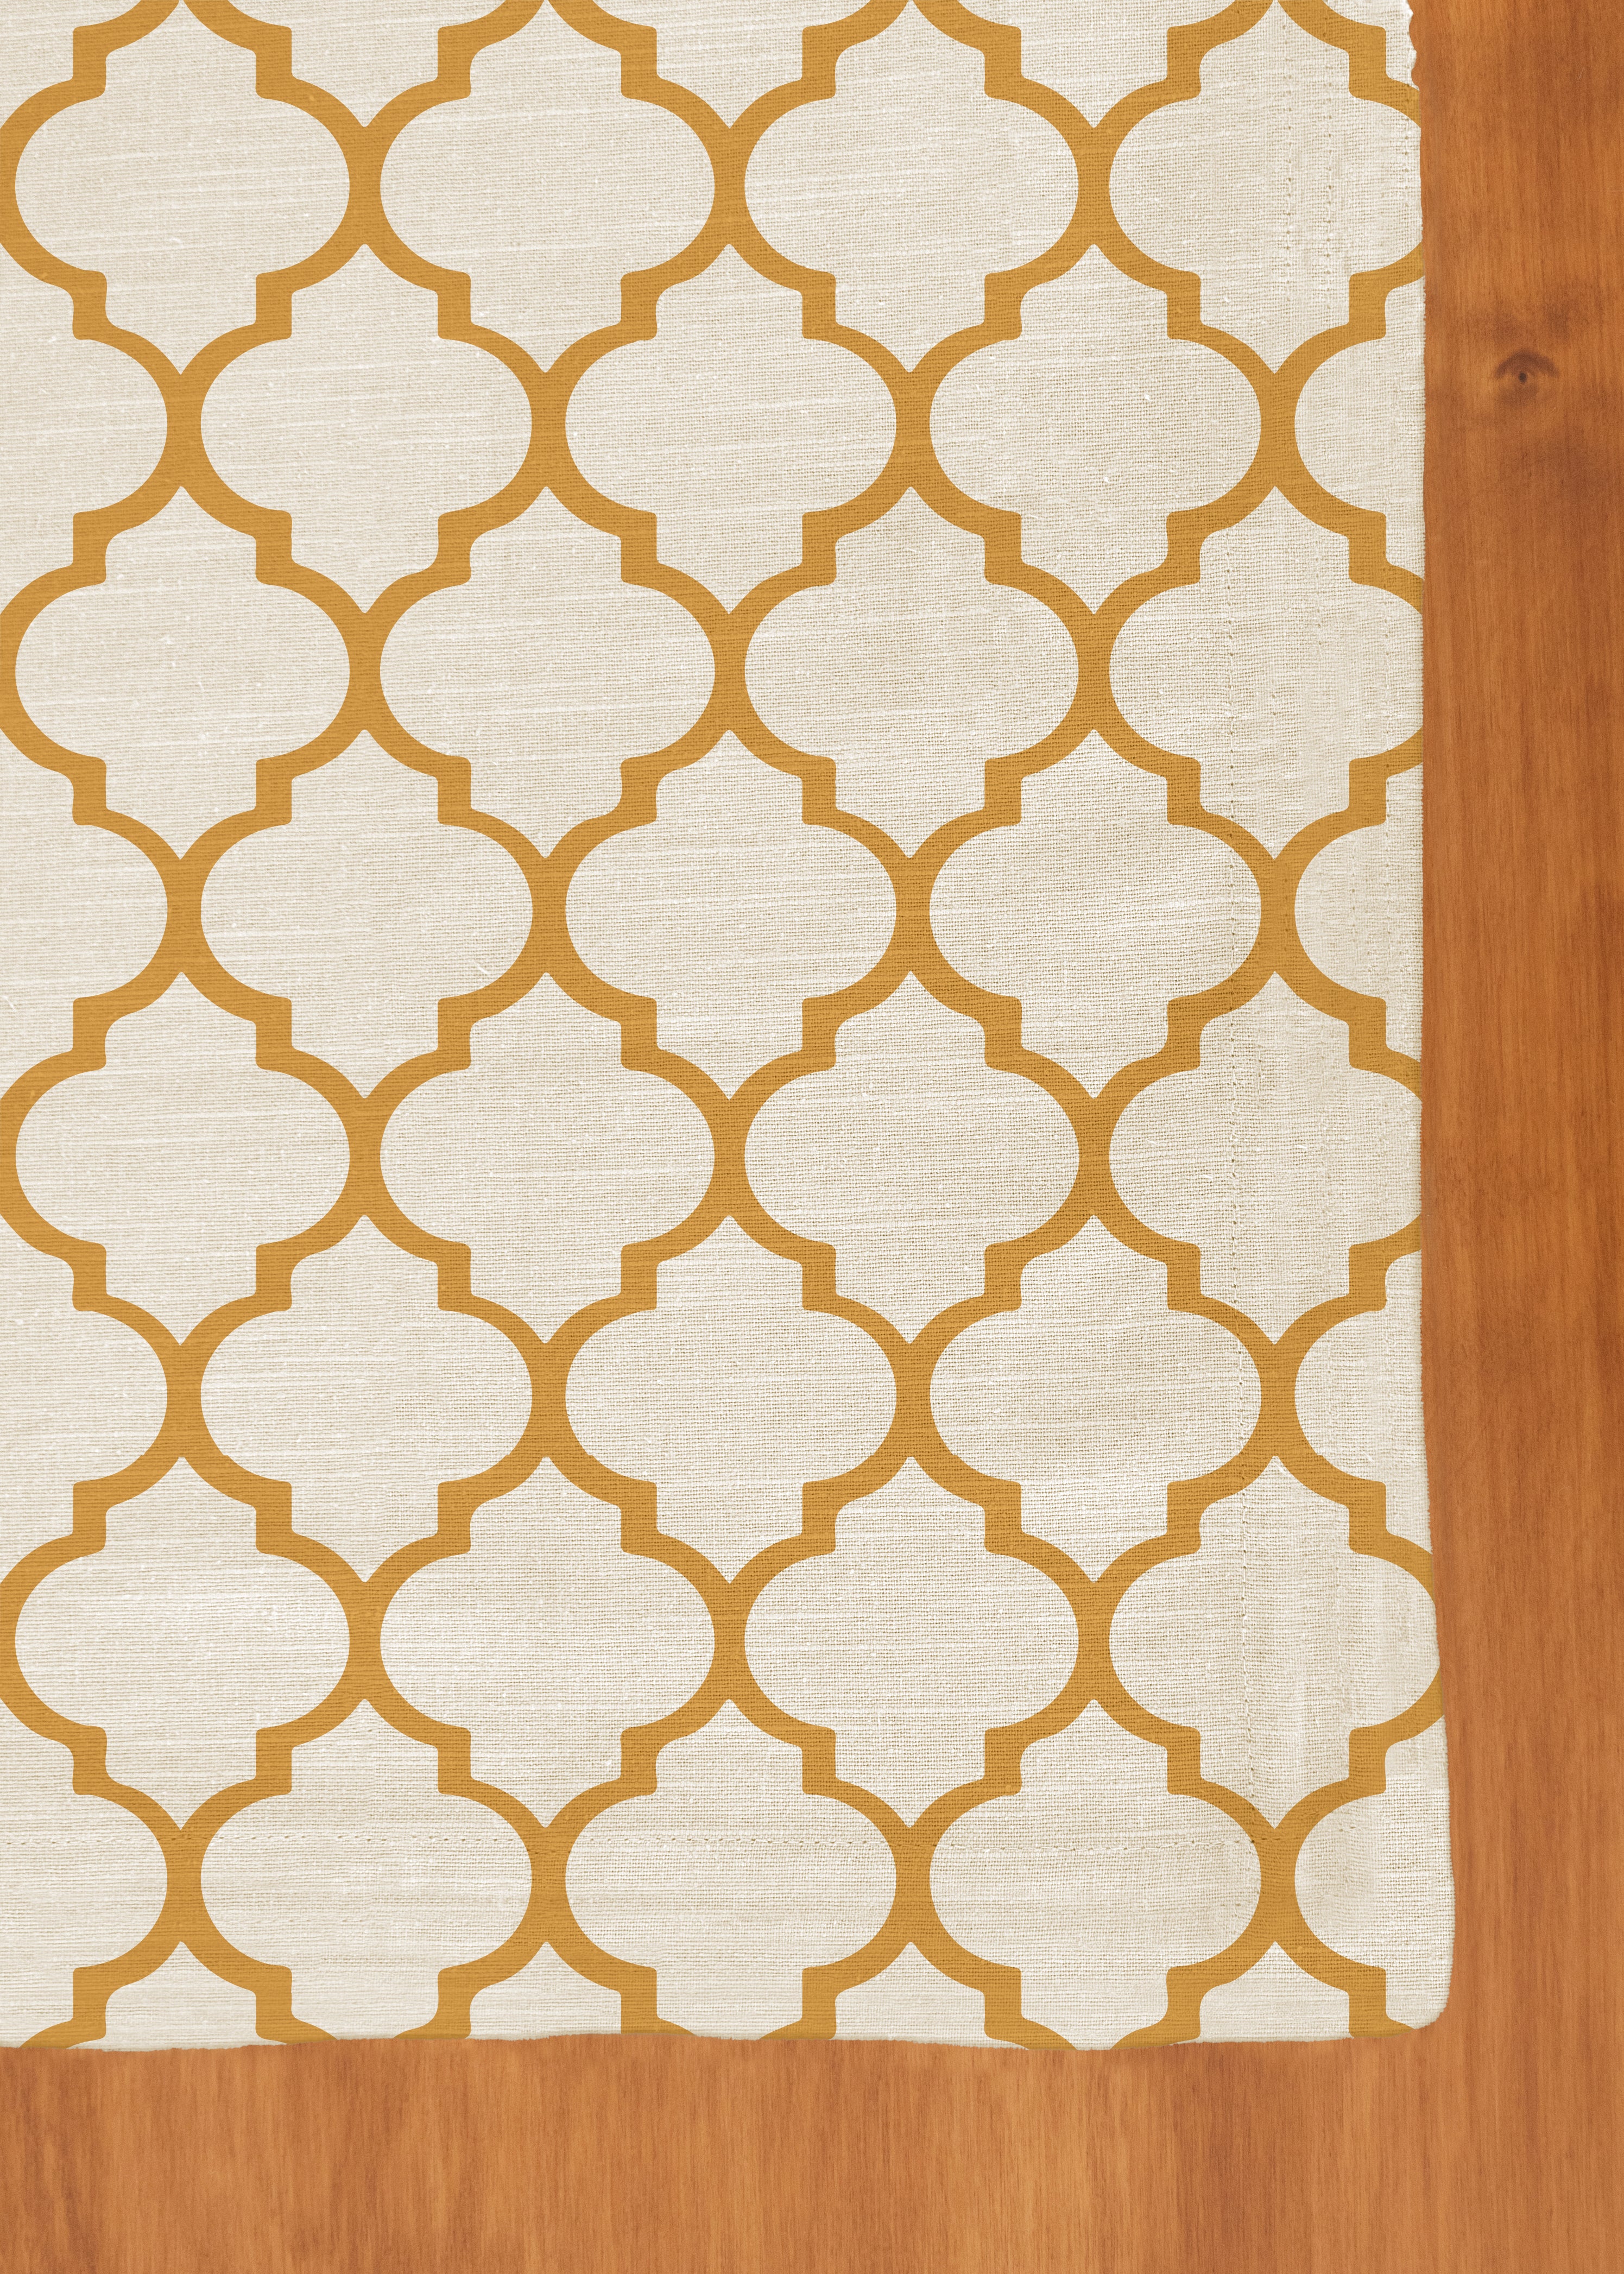 Trellis Printed Cotton Table Cloth - Mustard